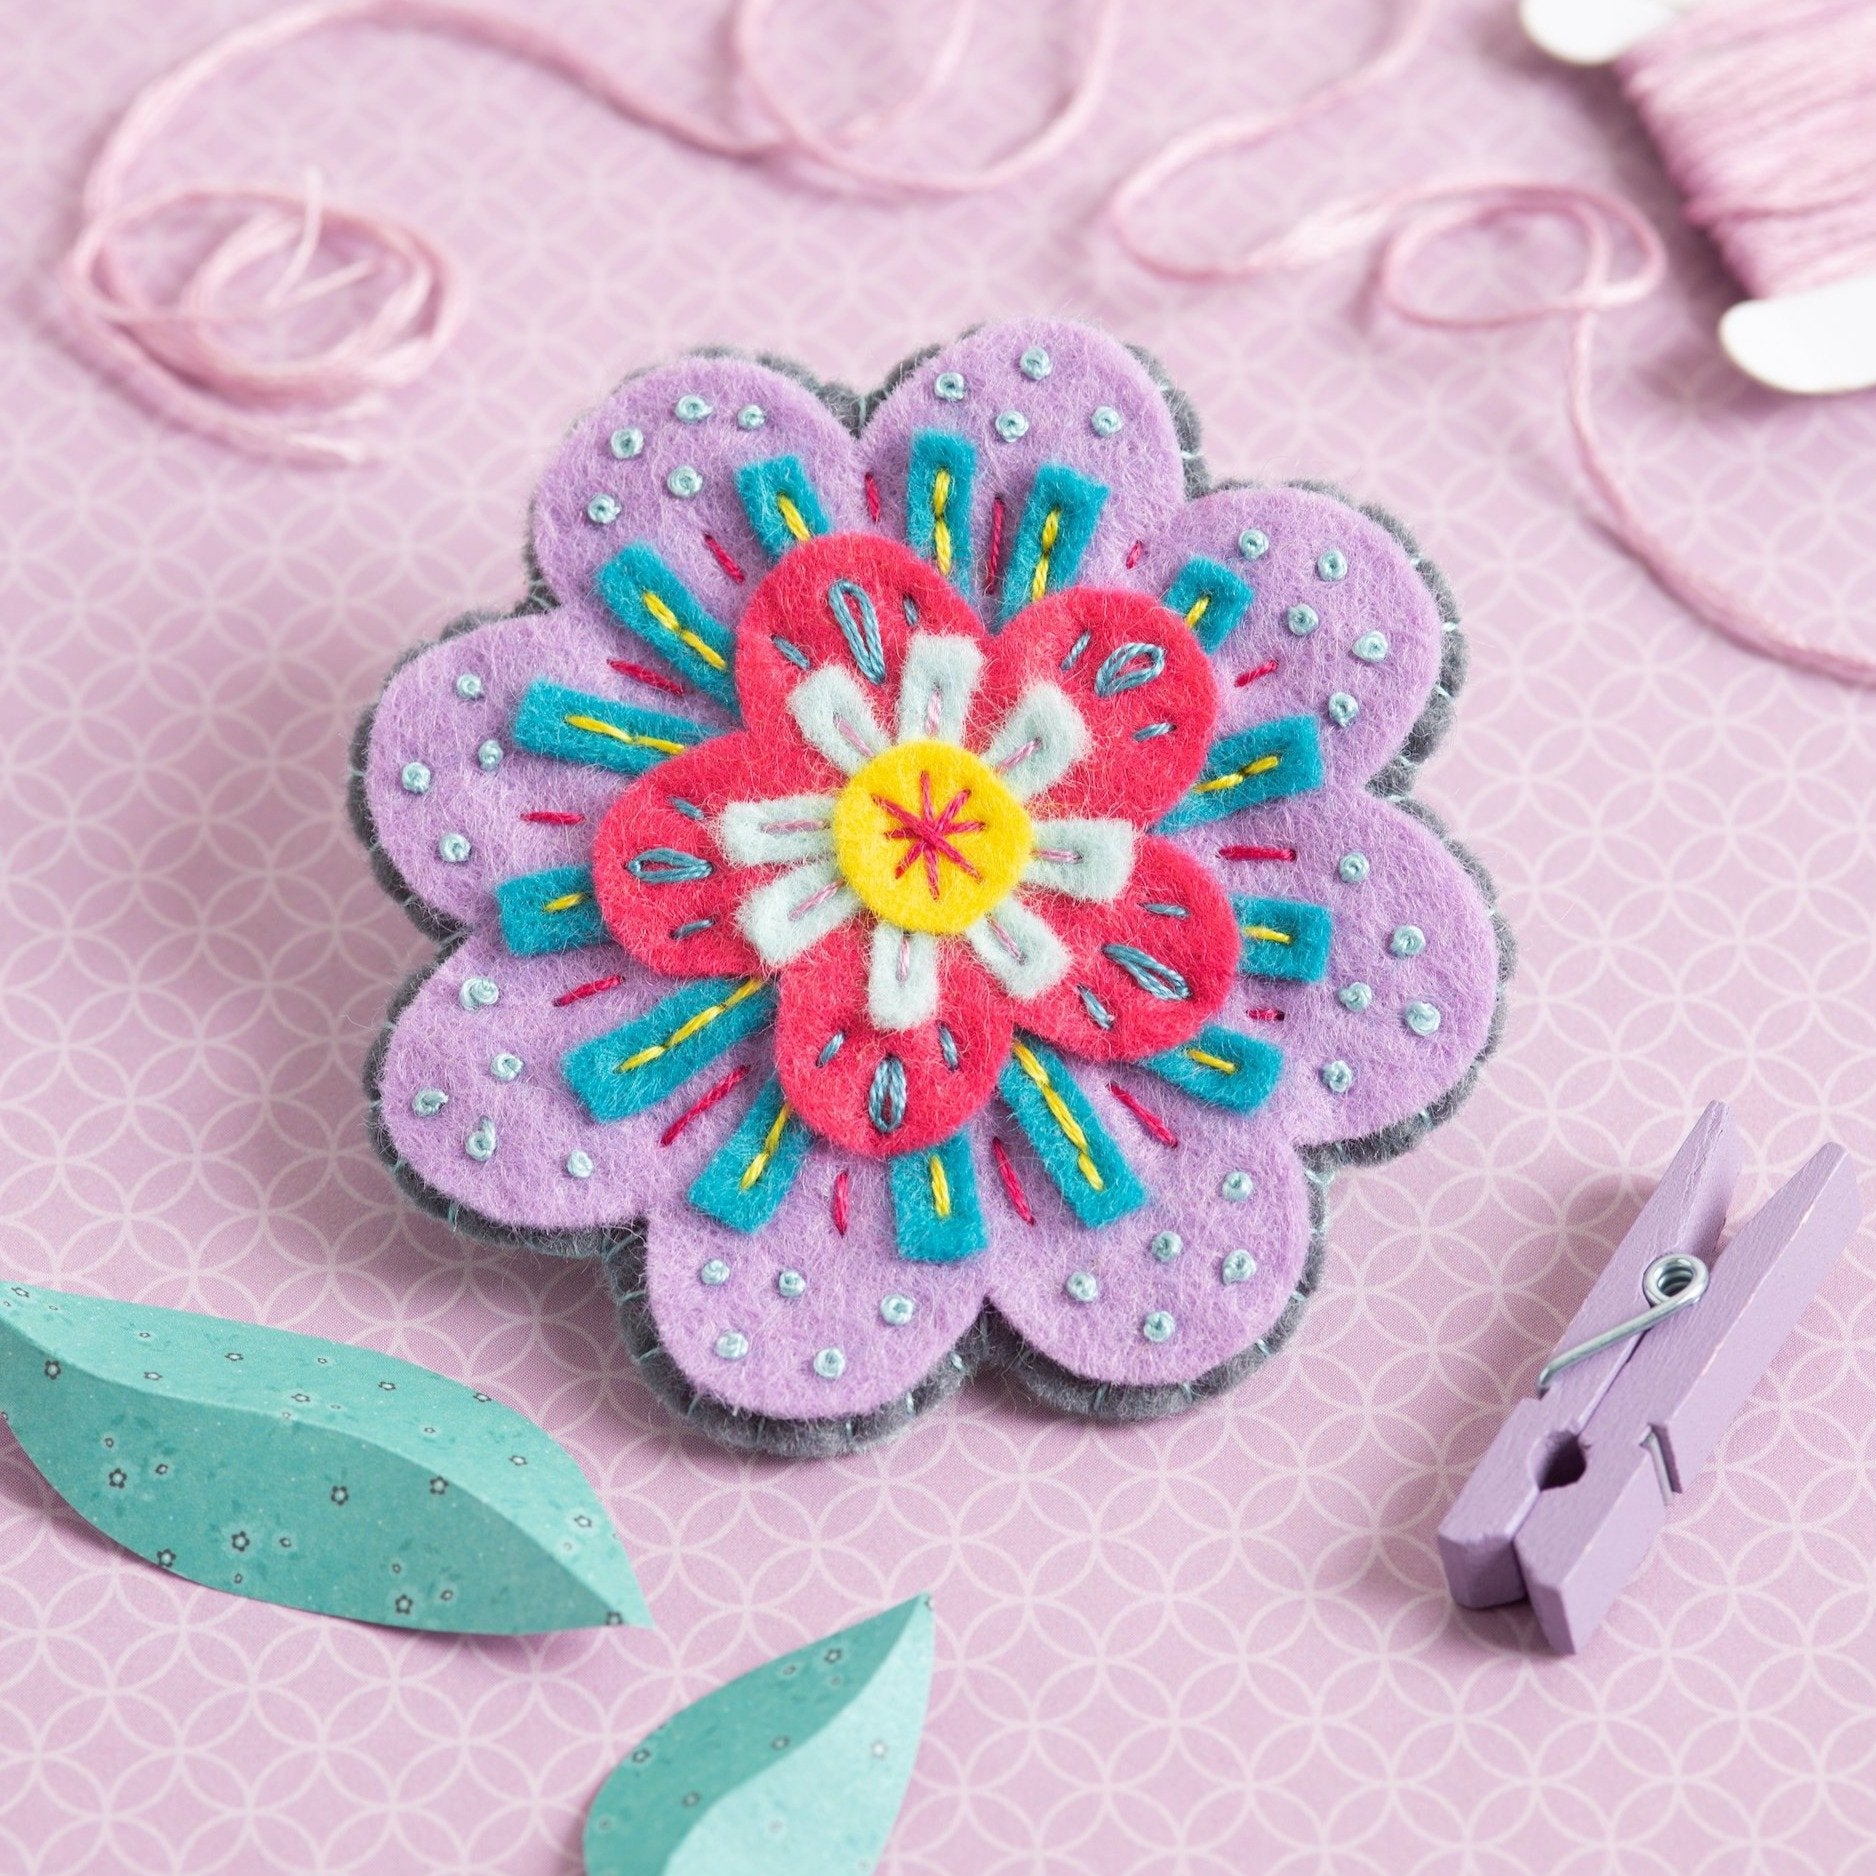 10cm Purple Handmade Sheet Flowers - Felt and Yarn